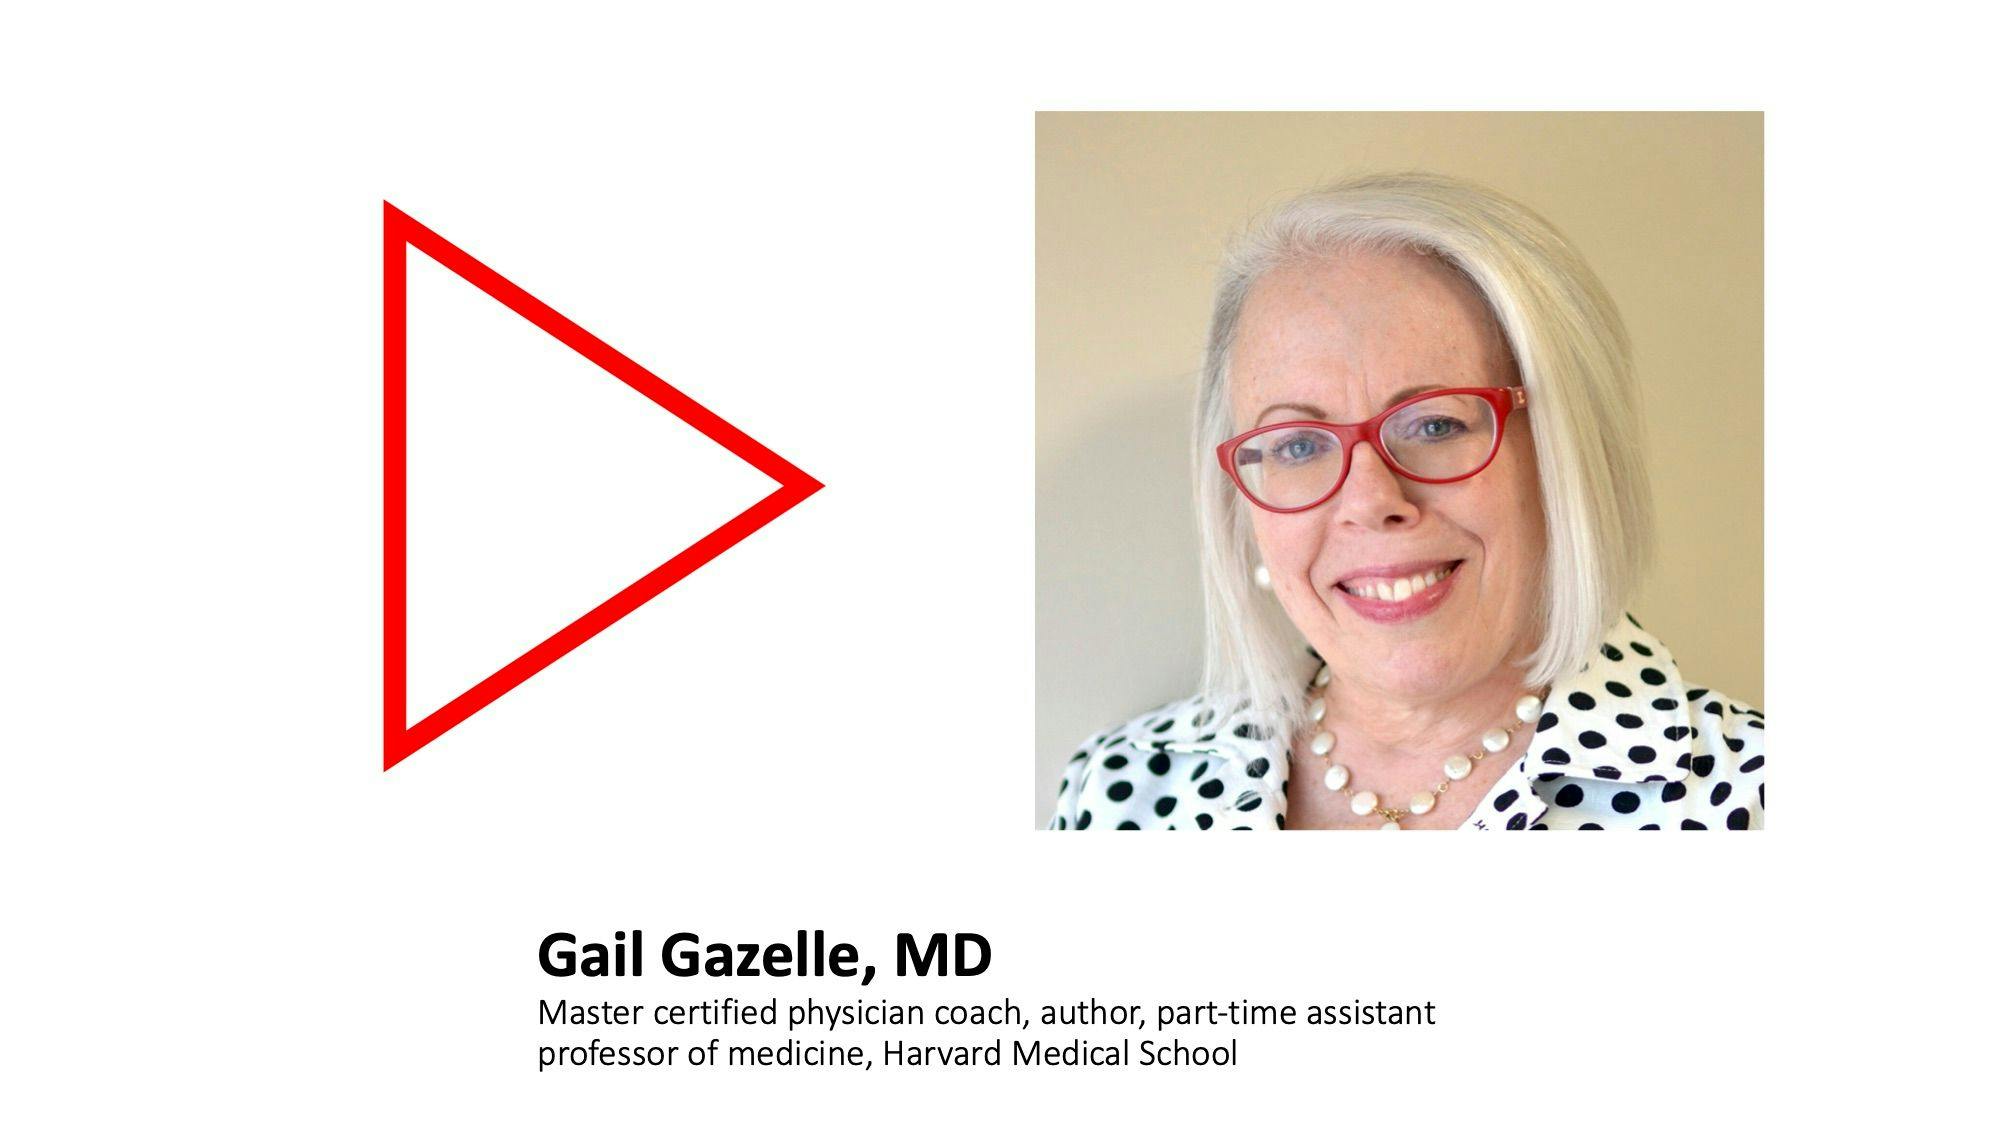 Gail Gazelle, MD, gives expert advice